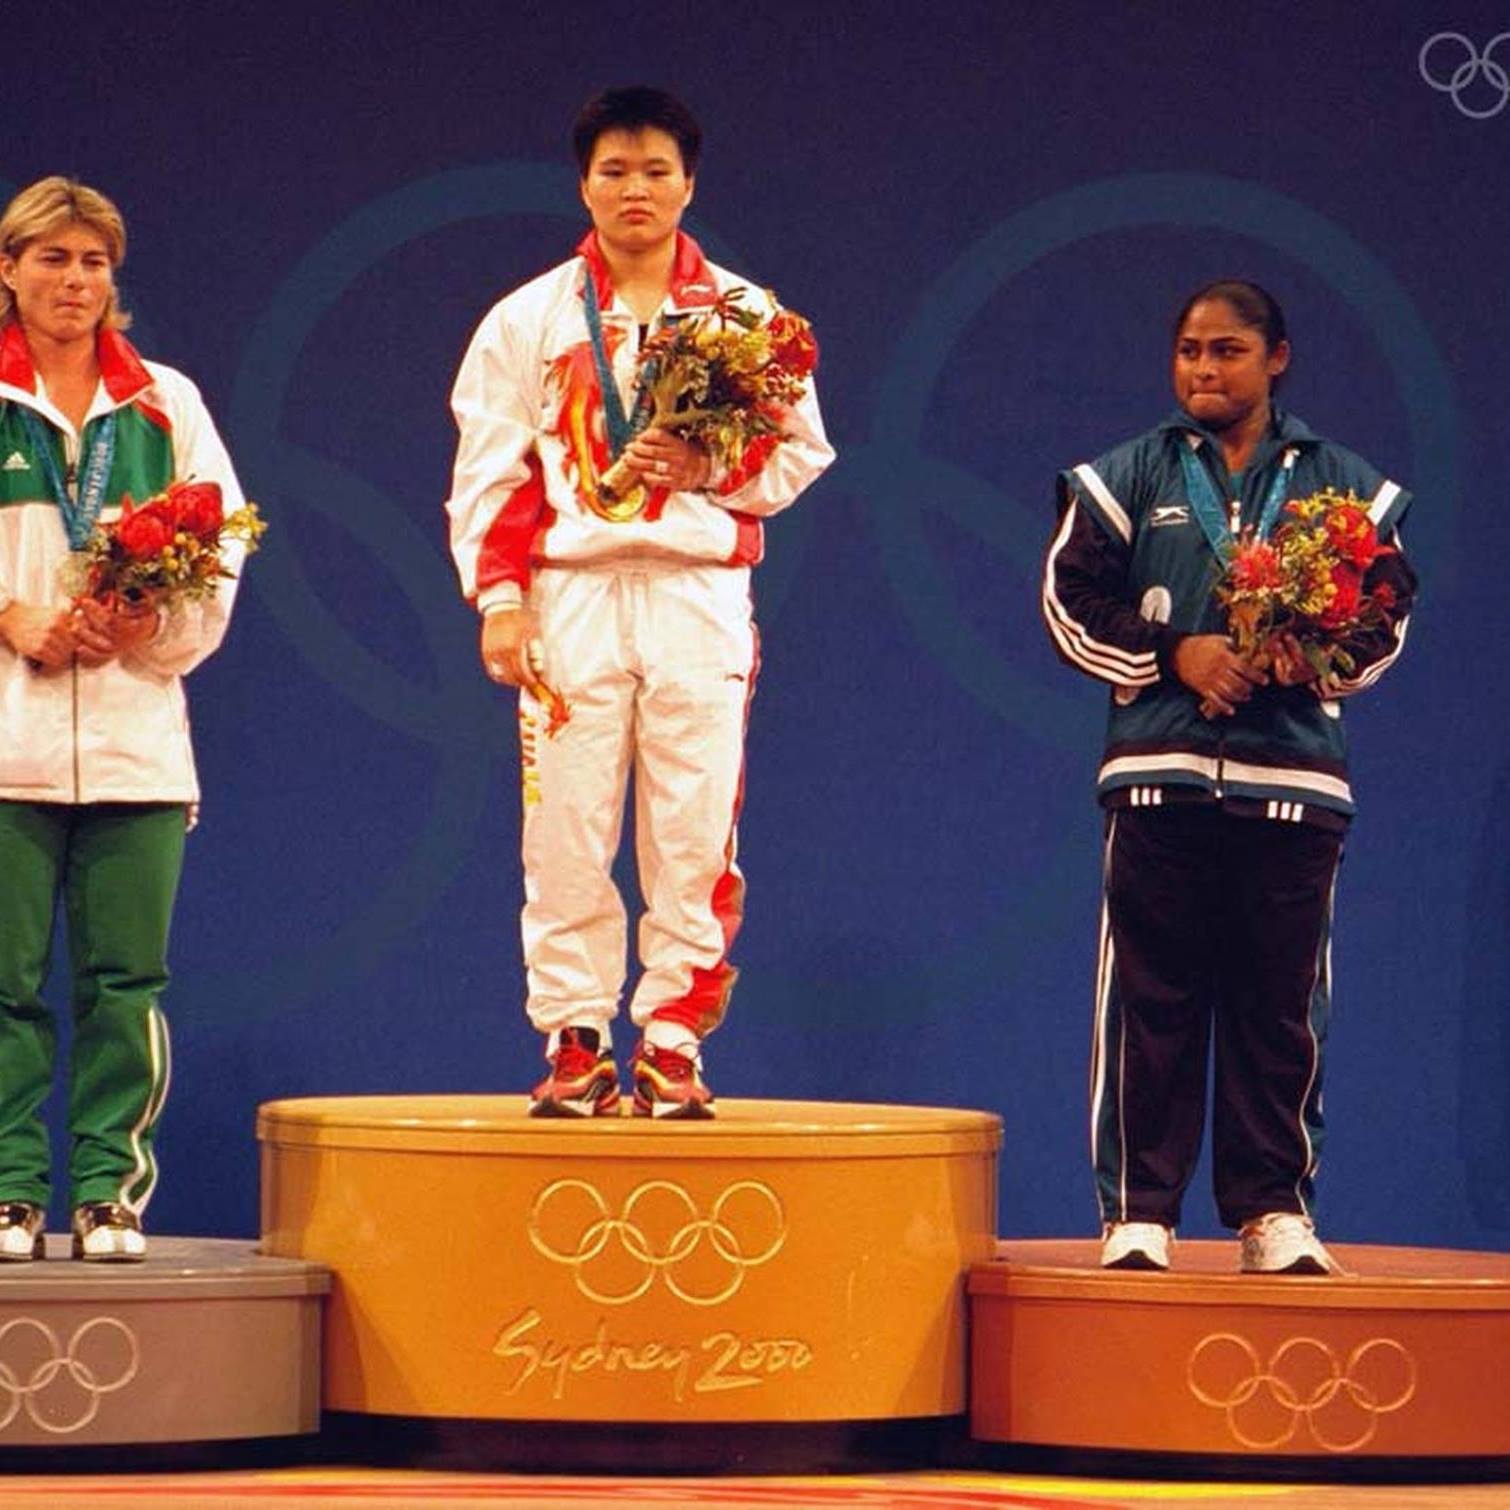 Karnam Malleswari on the podium at the 2000 Olympics (Source: Karnam Malleswari/Facebook)